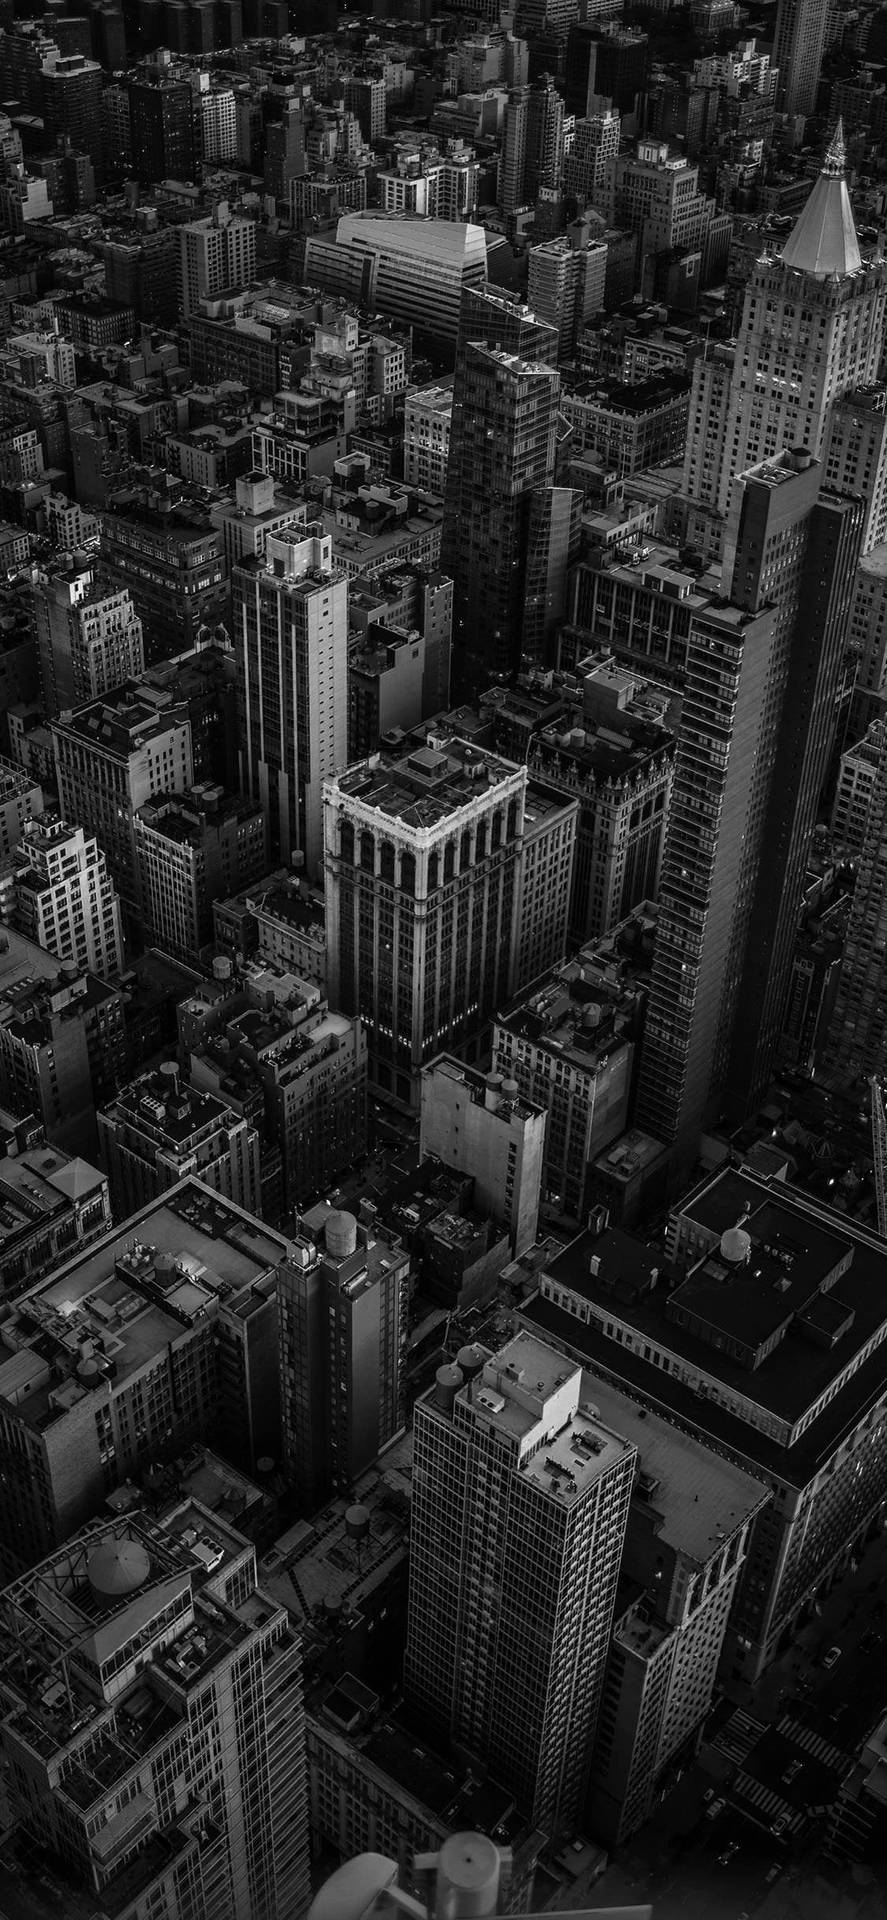 "Skyline of the New York City" Wallpaper